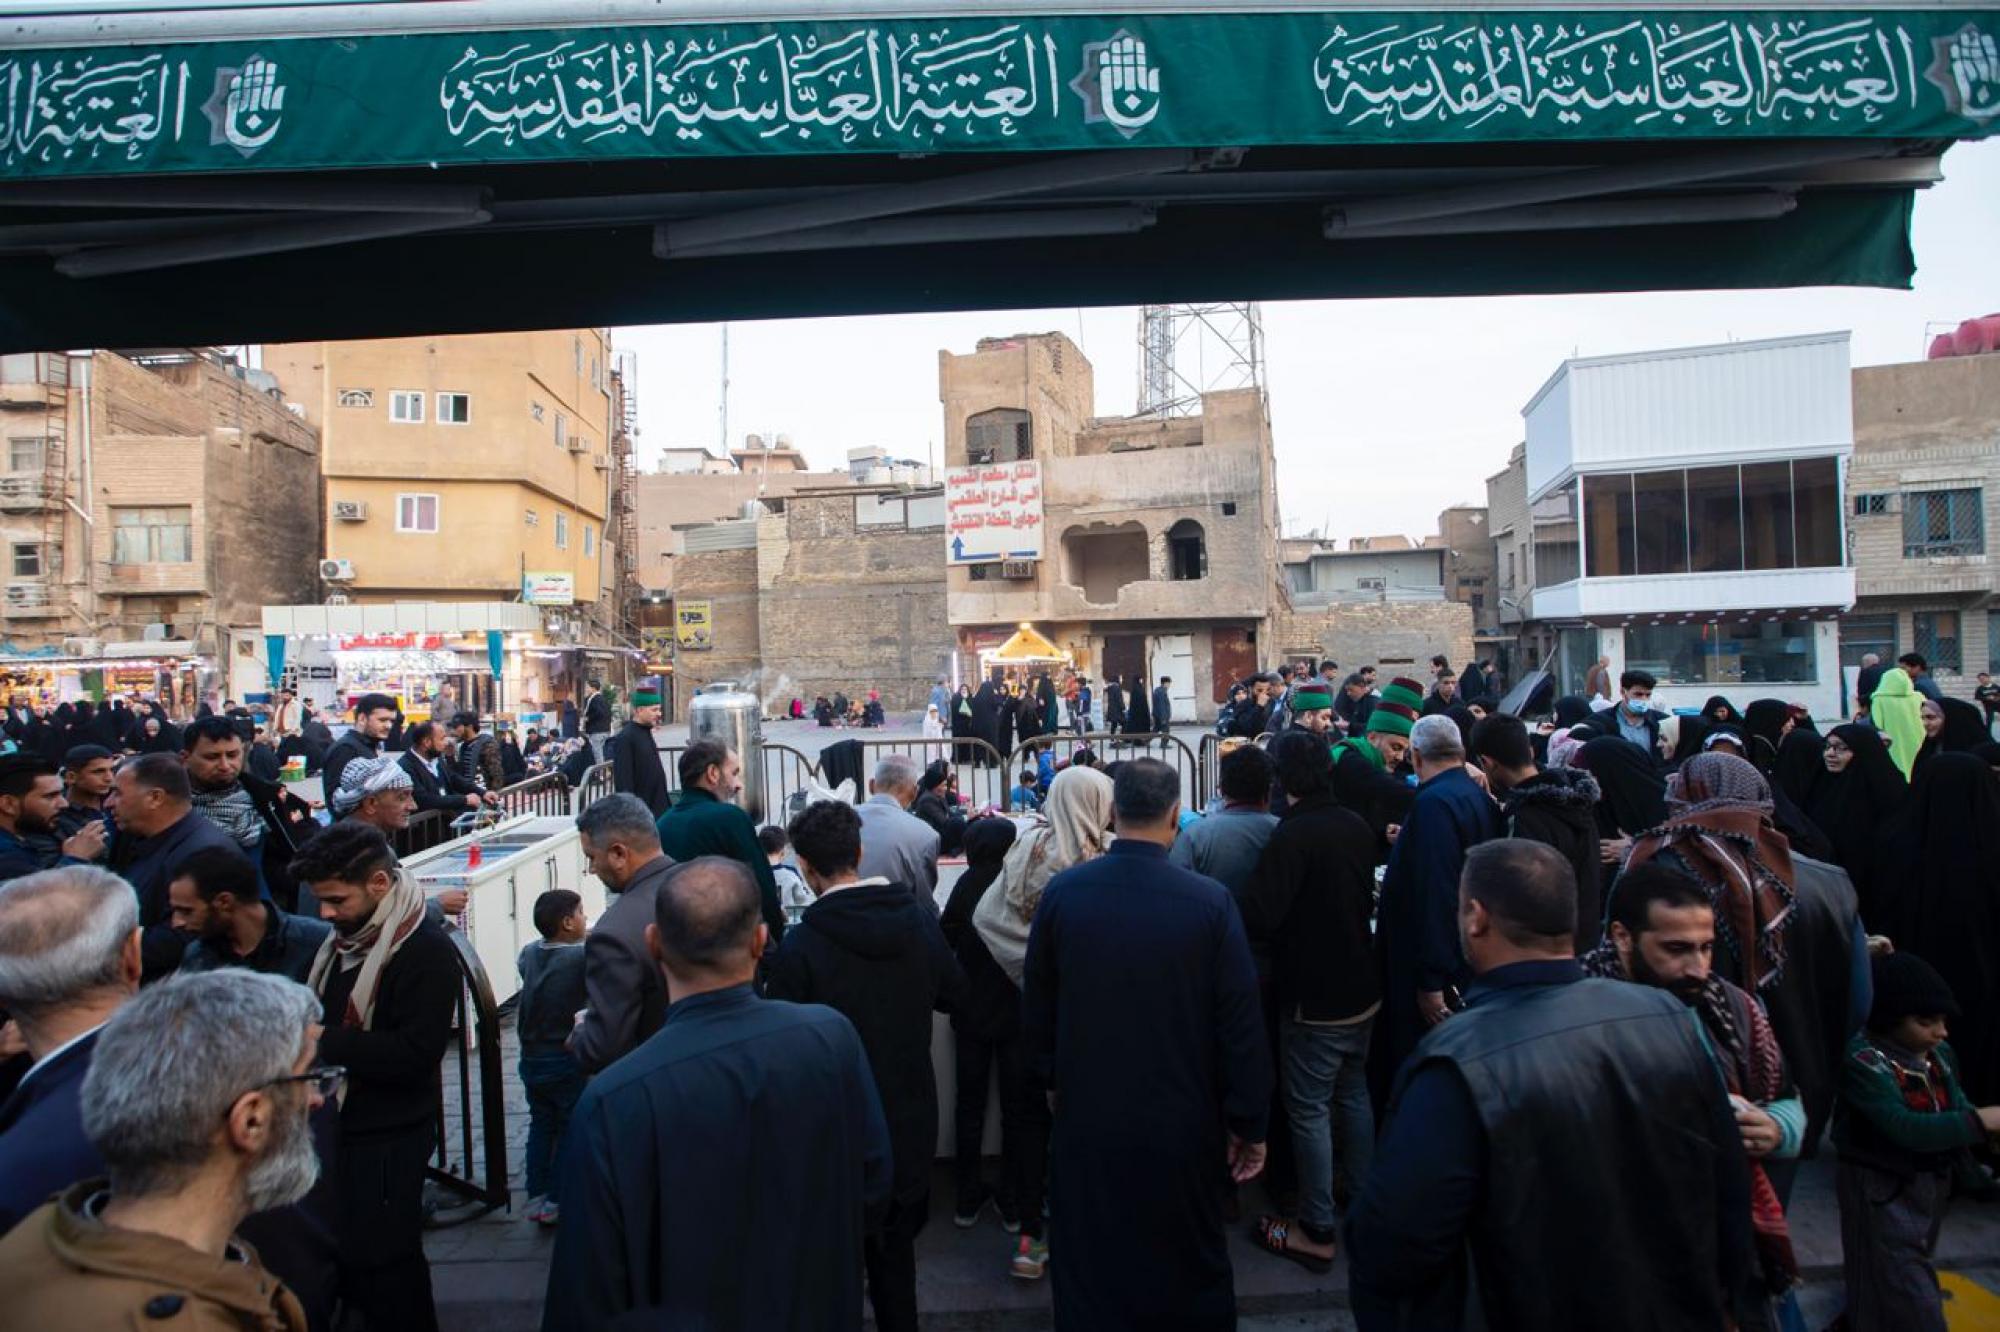 Sayed servants of al-Abbas shrine present to visitors on martyrdom Sayyida Zahra